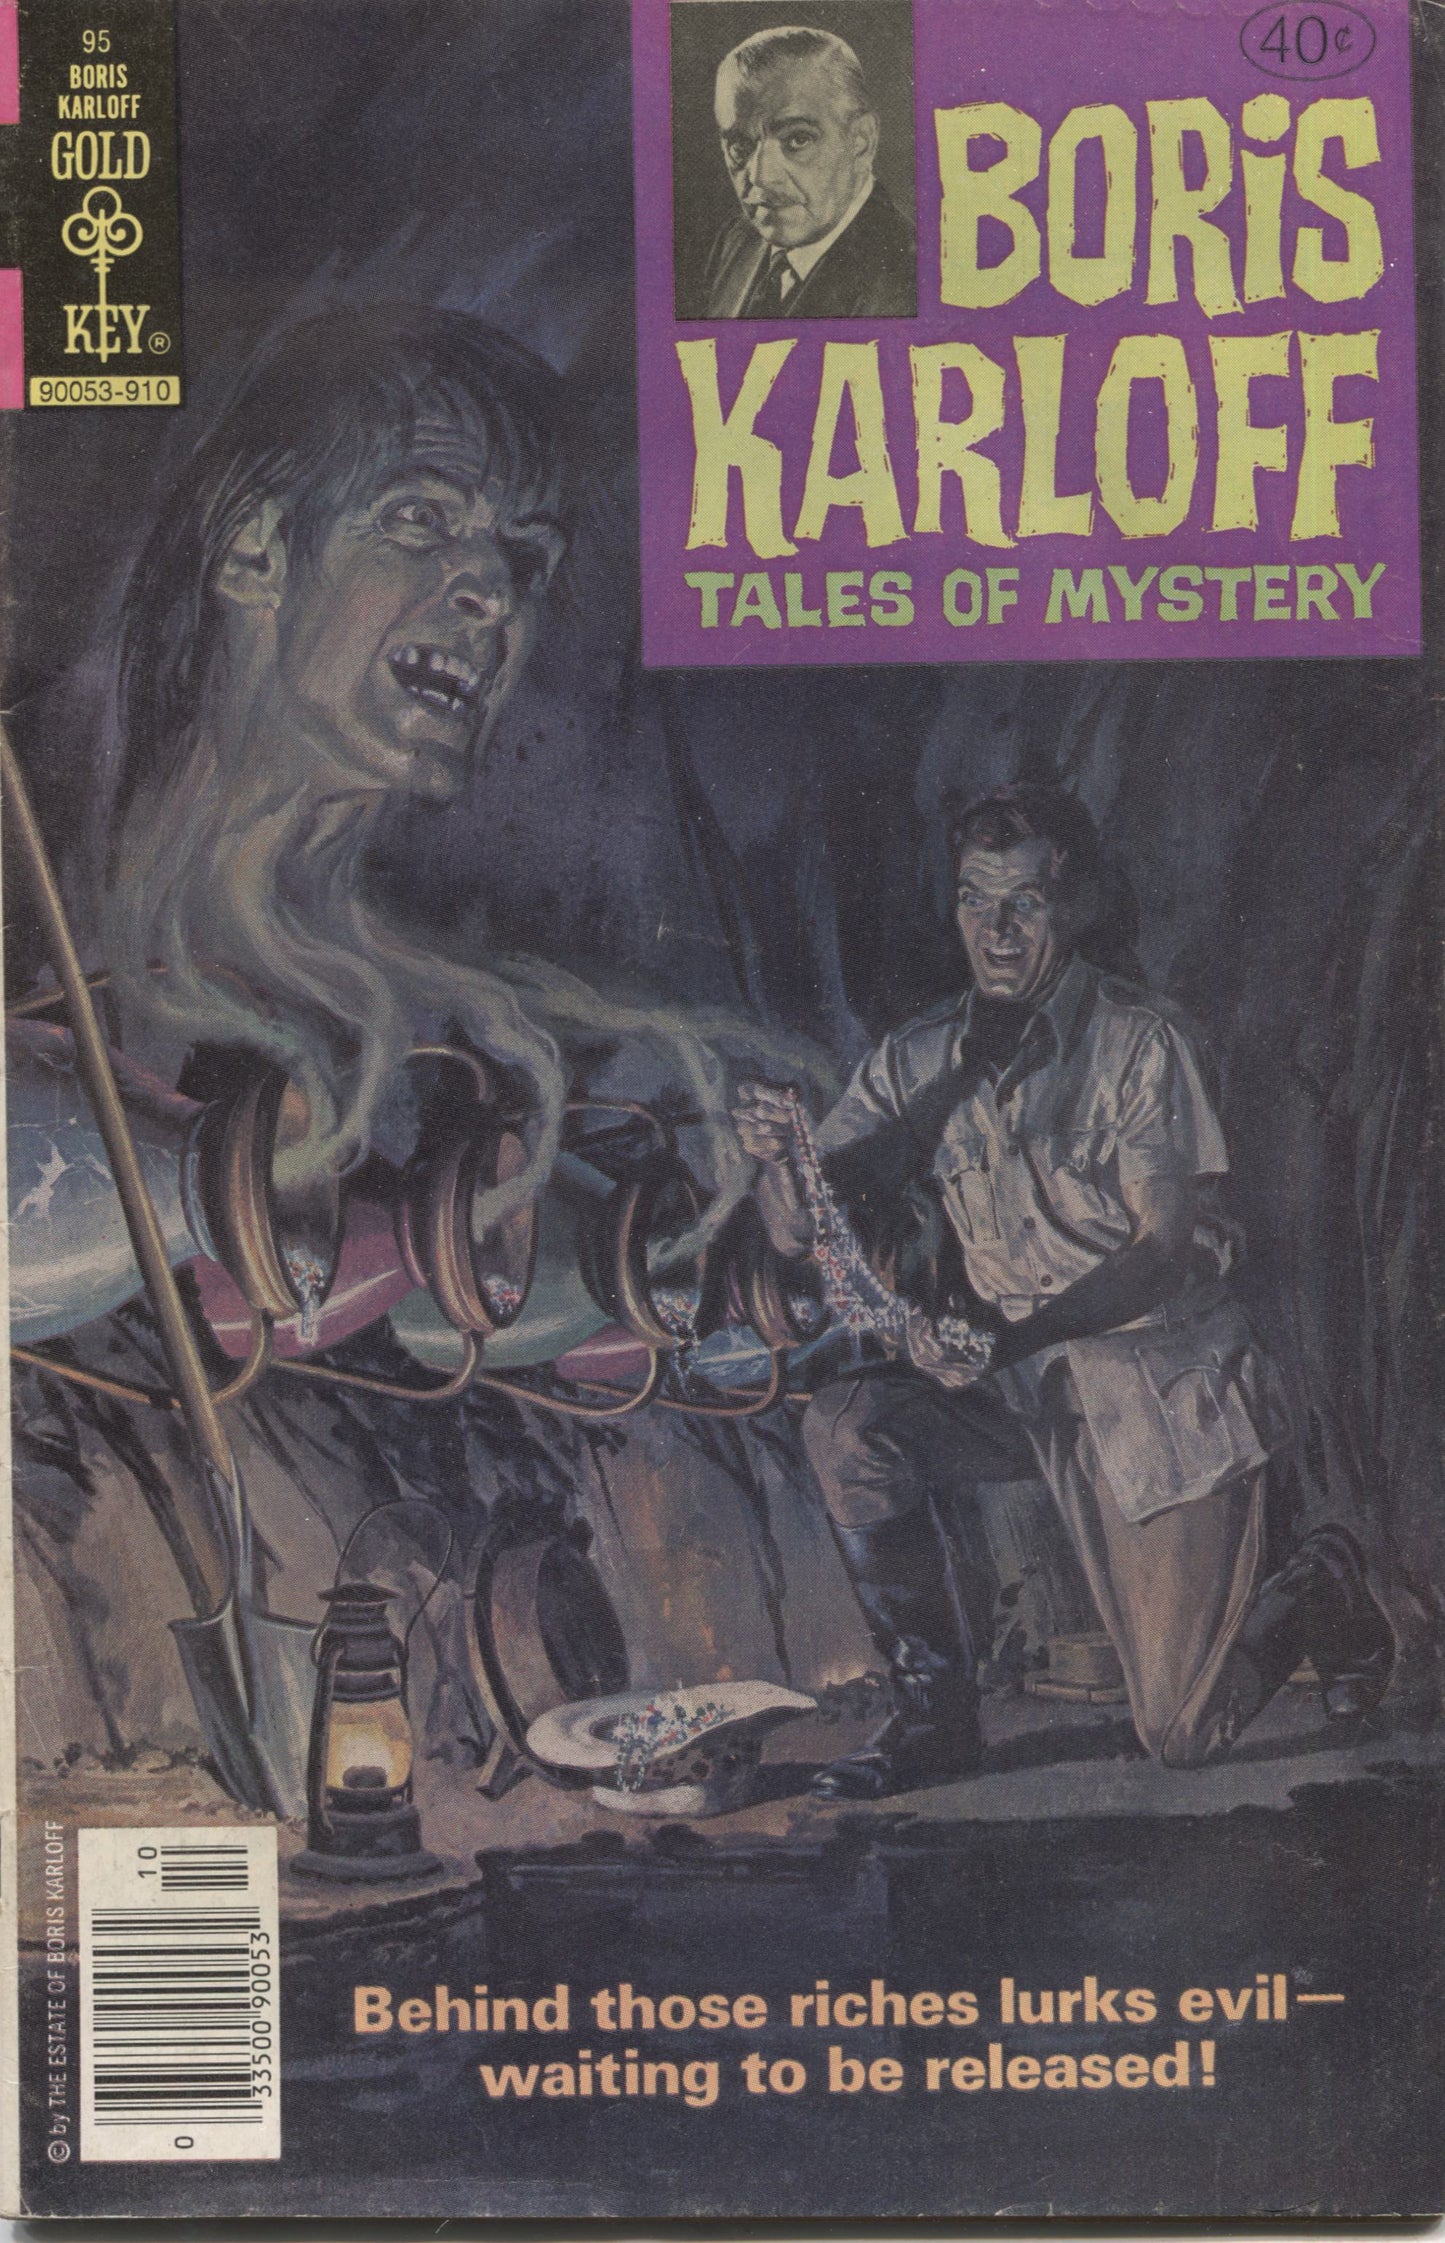 Boris Karloff Tales of Mystery No. 95, Gold Key Comics, October 1979